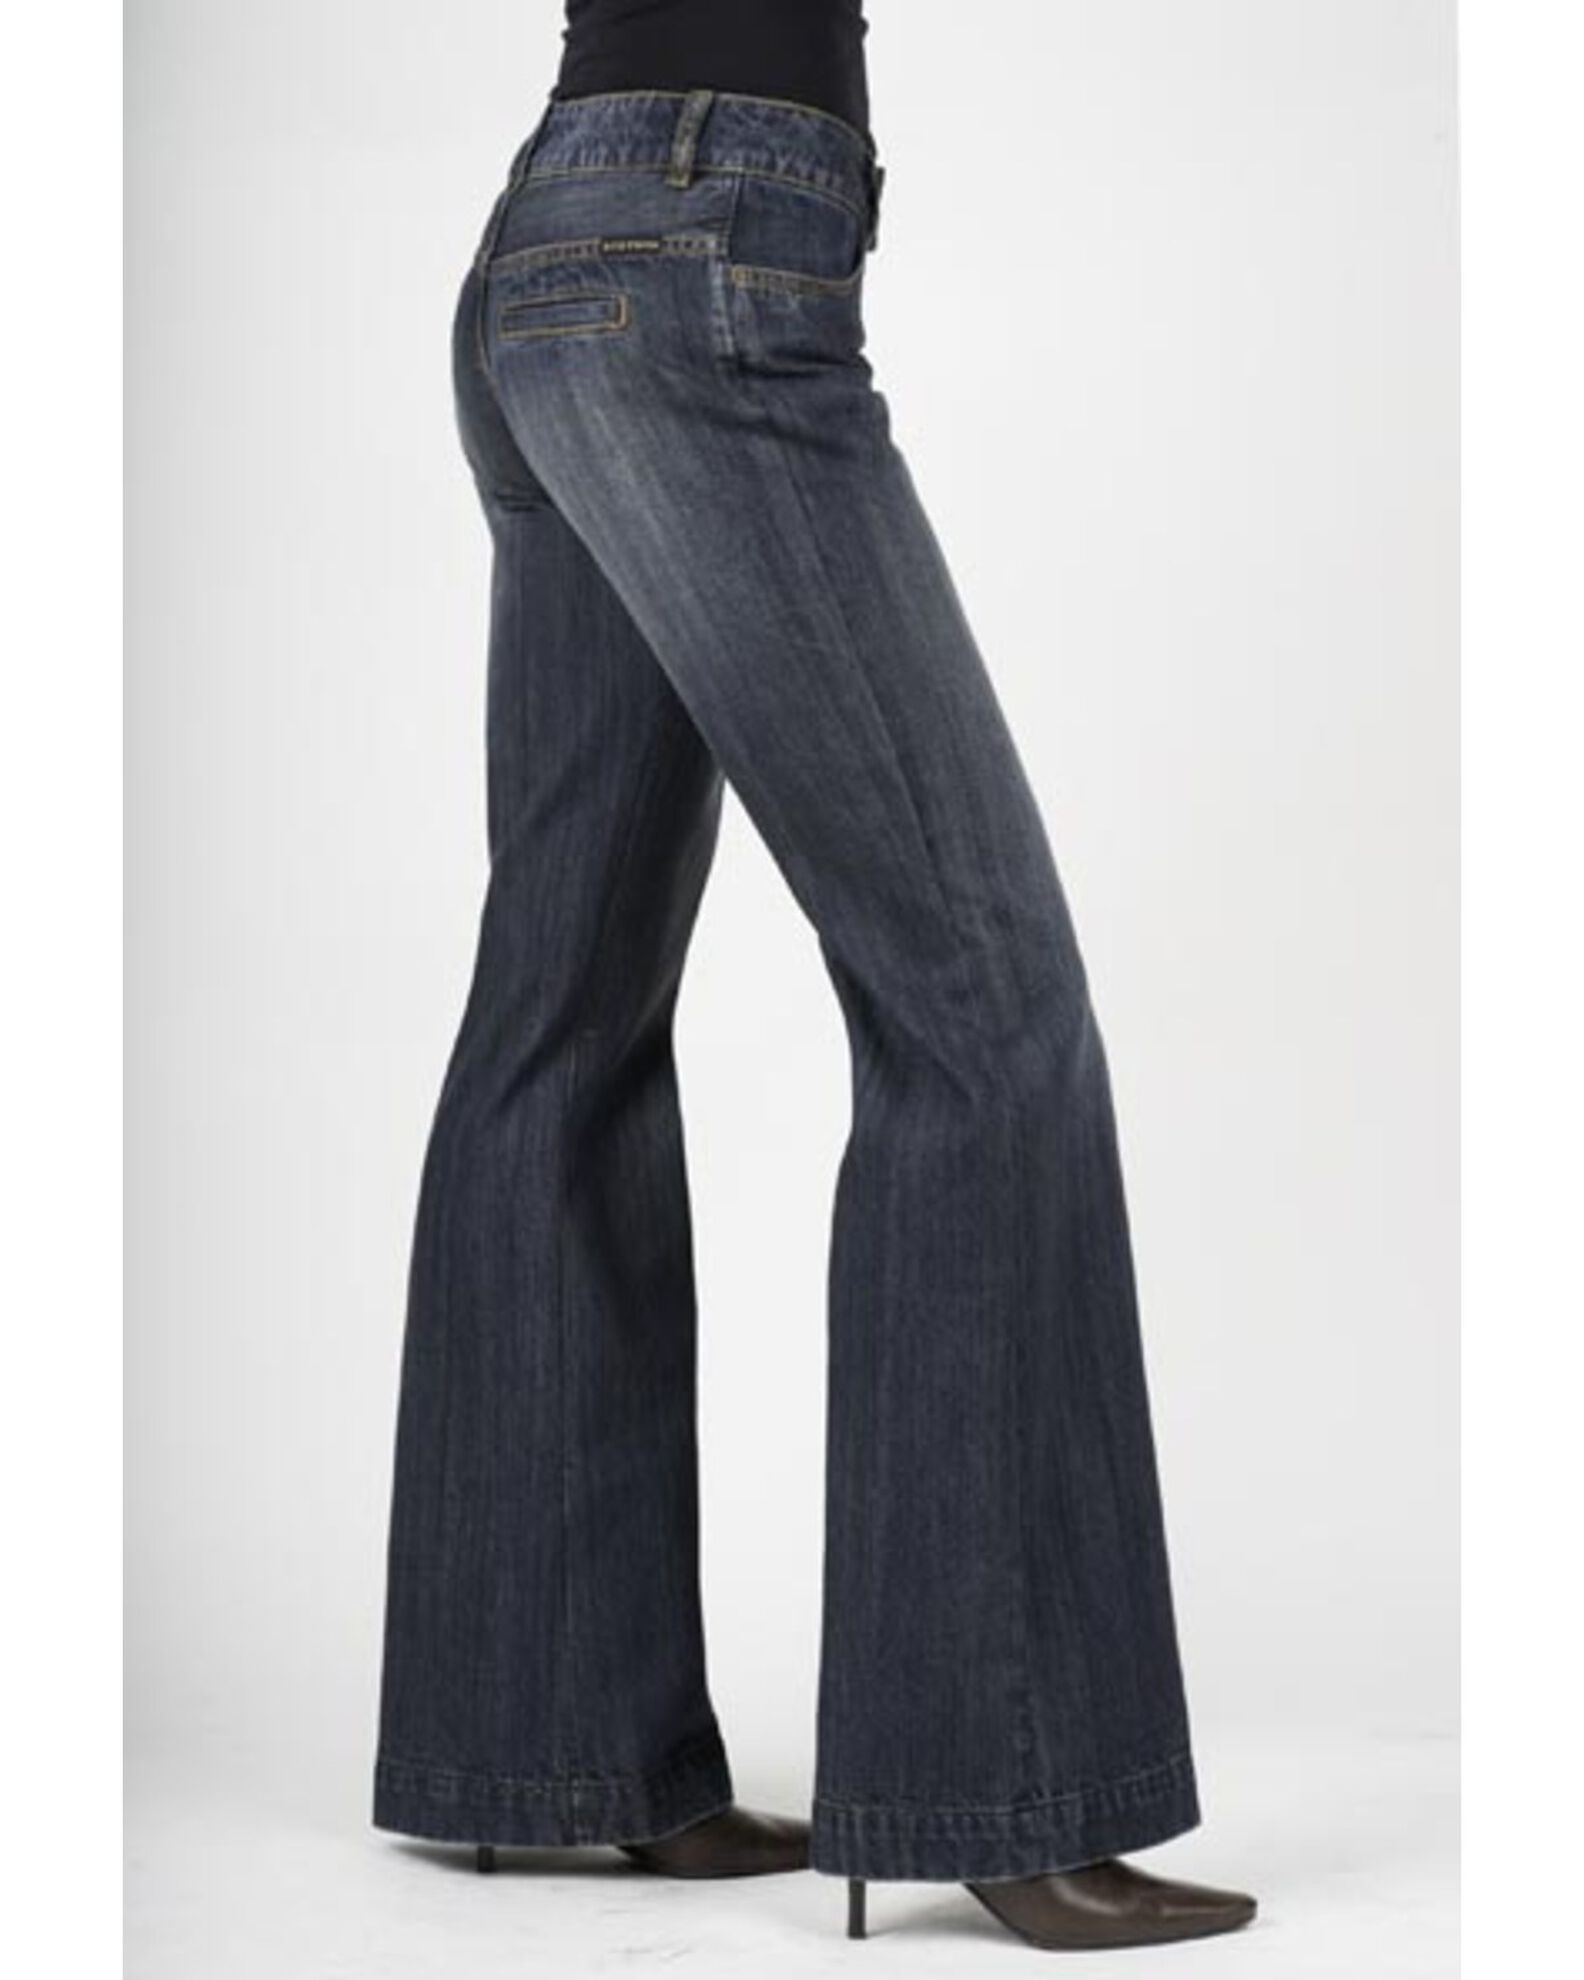 Stetson Women's 214 Fit City Trouser Jeans | Boot Barn